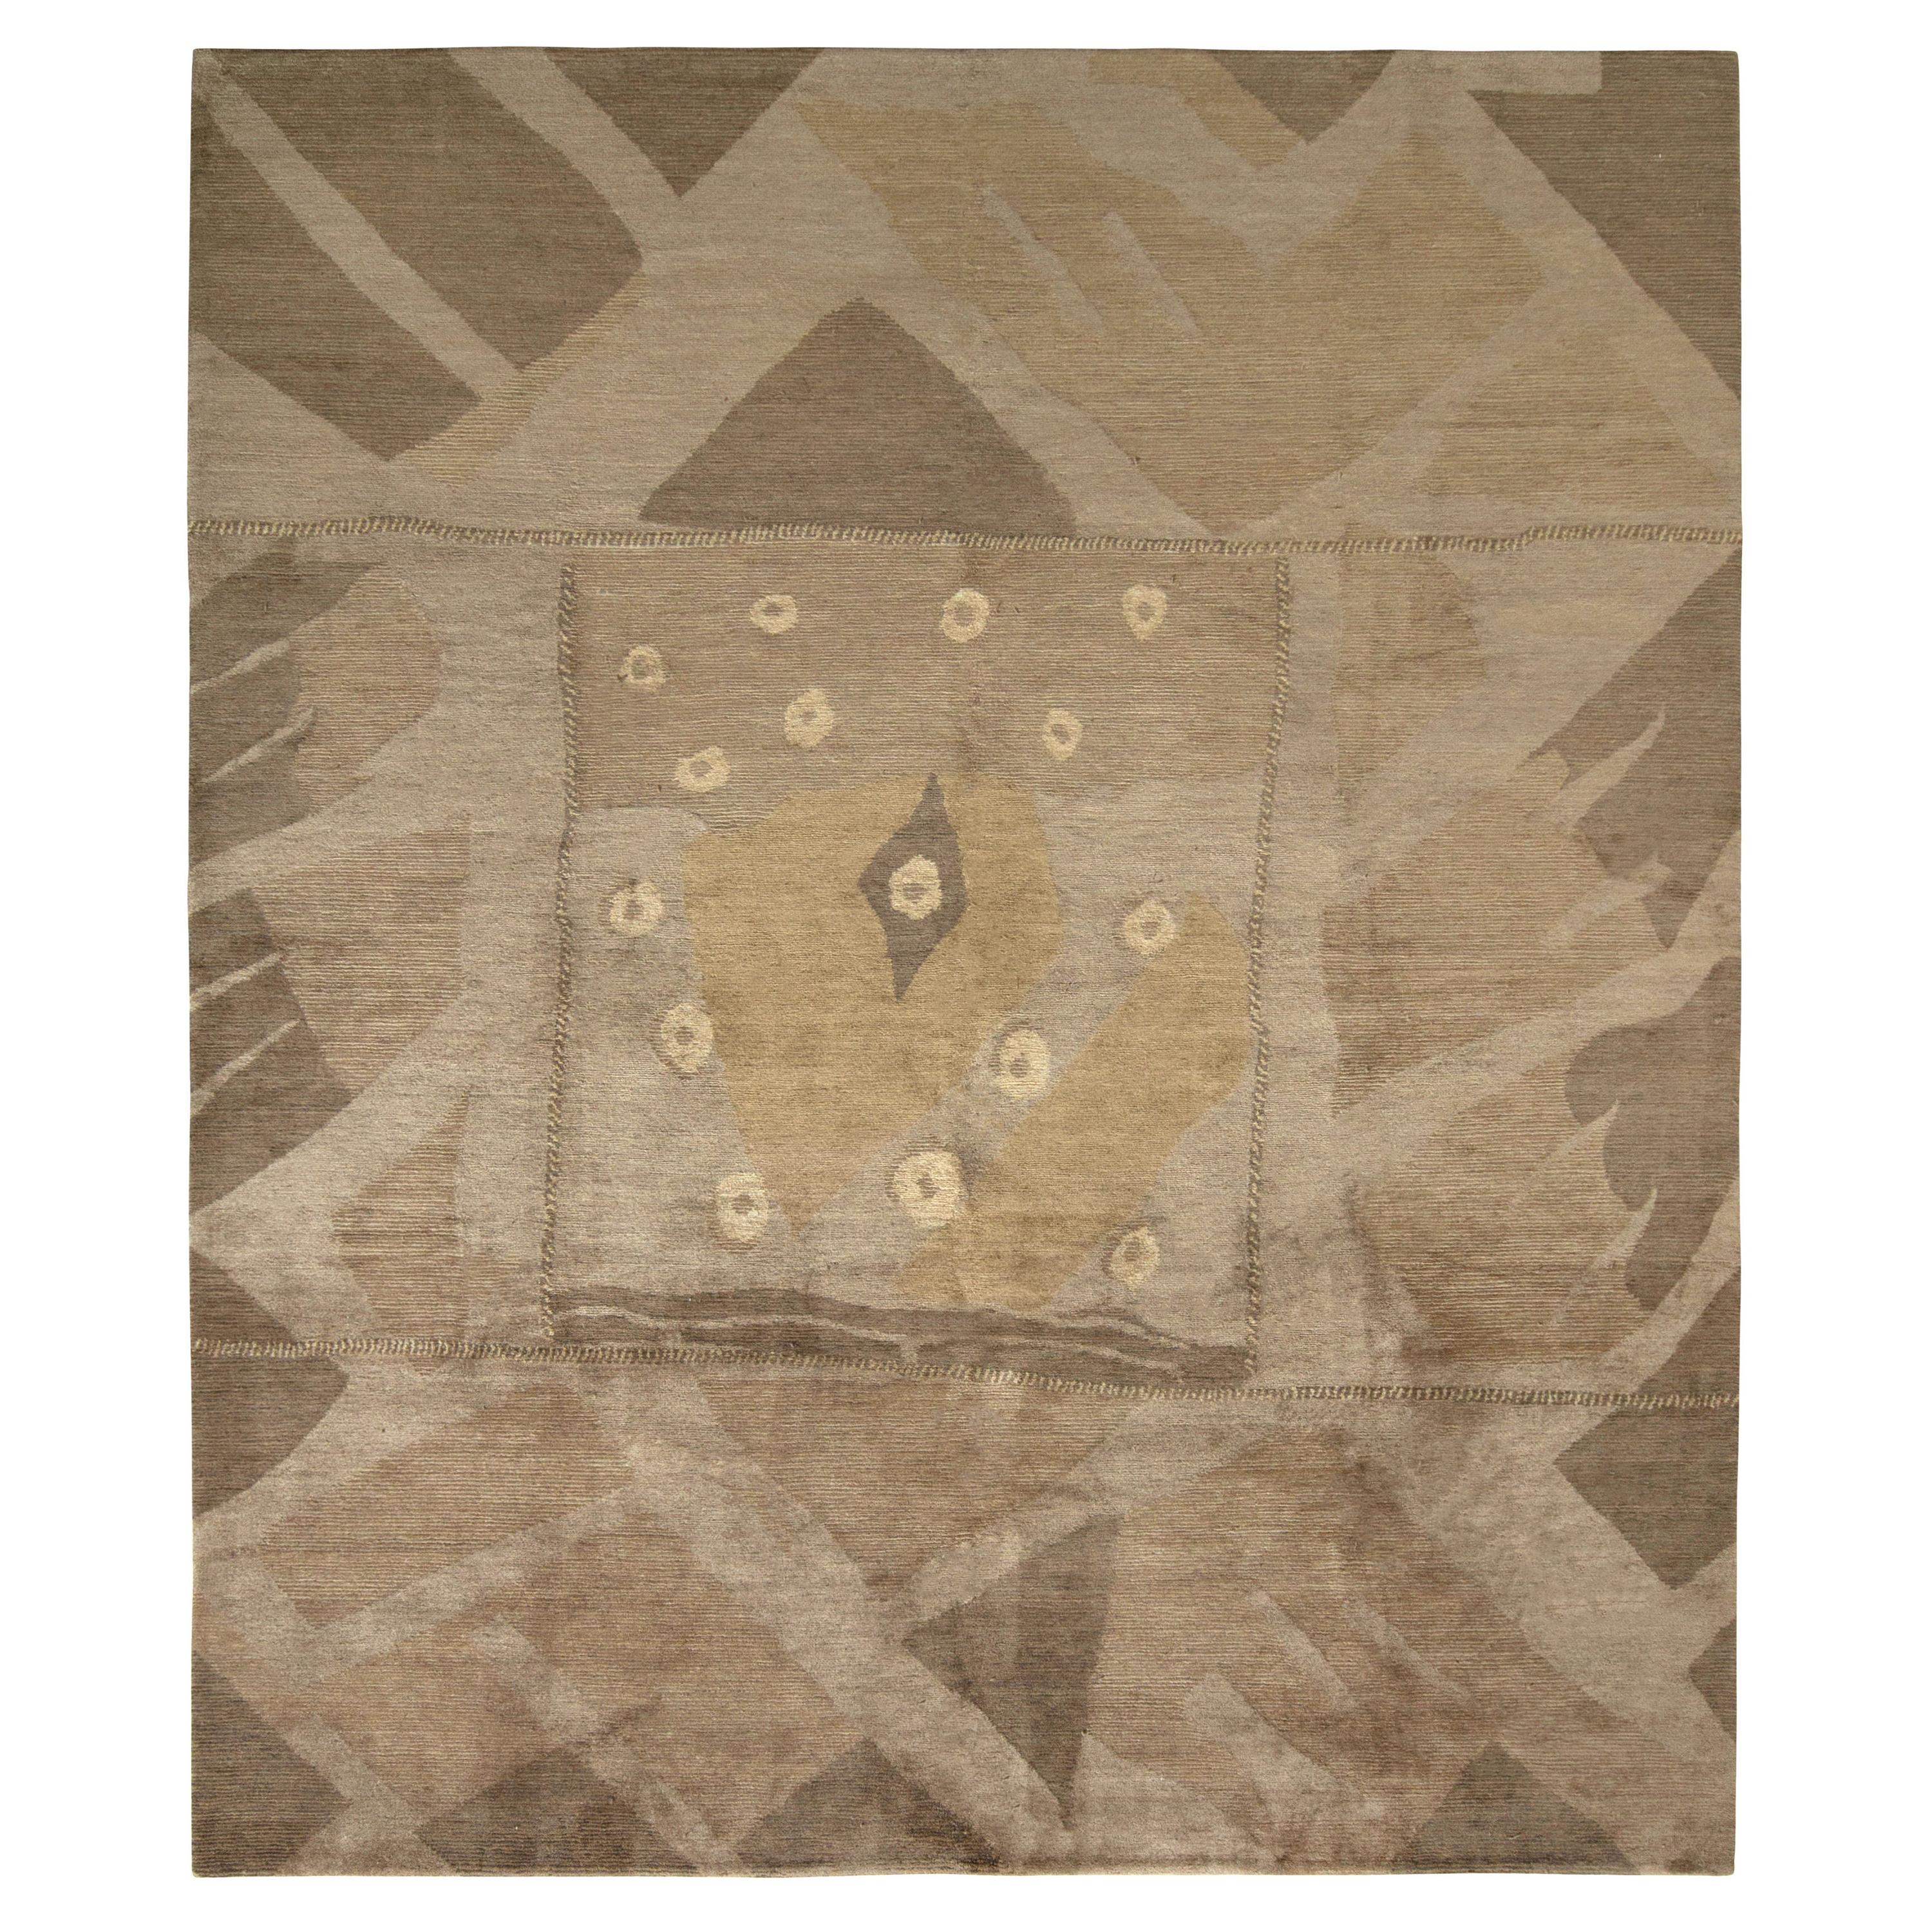 Rug & Kilim’s Cubist Style Modern Deco Rug in Beige Brown Geometric Pattern